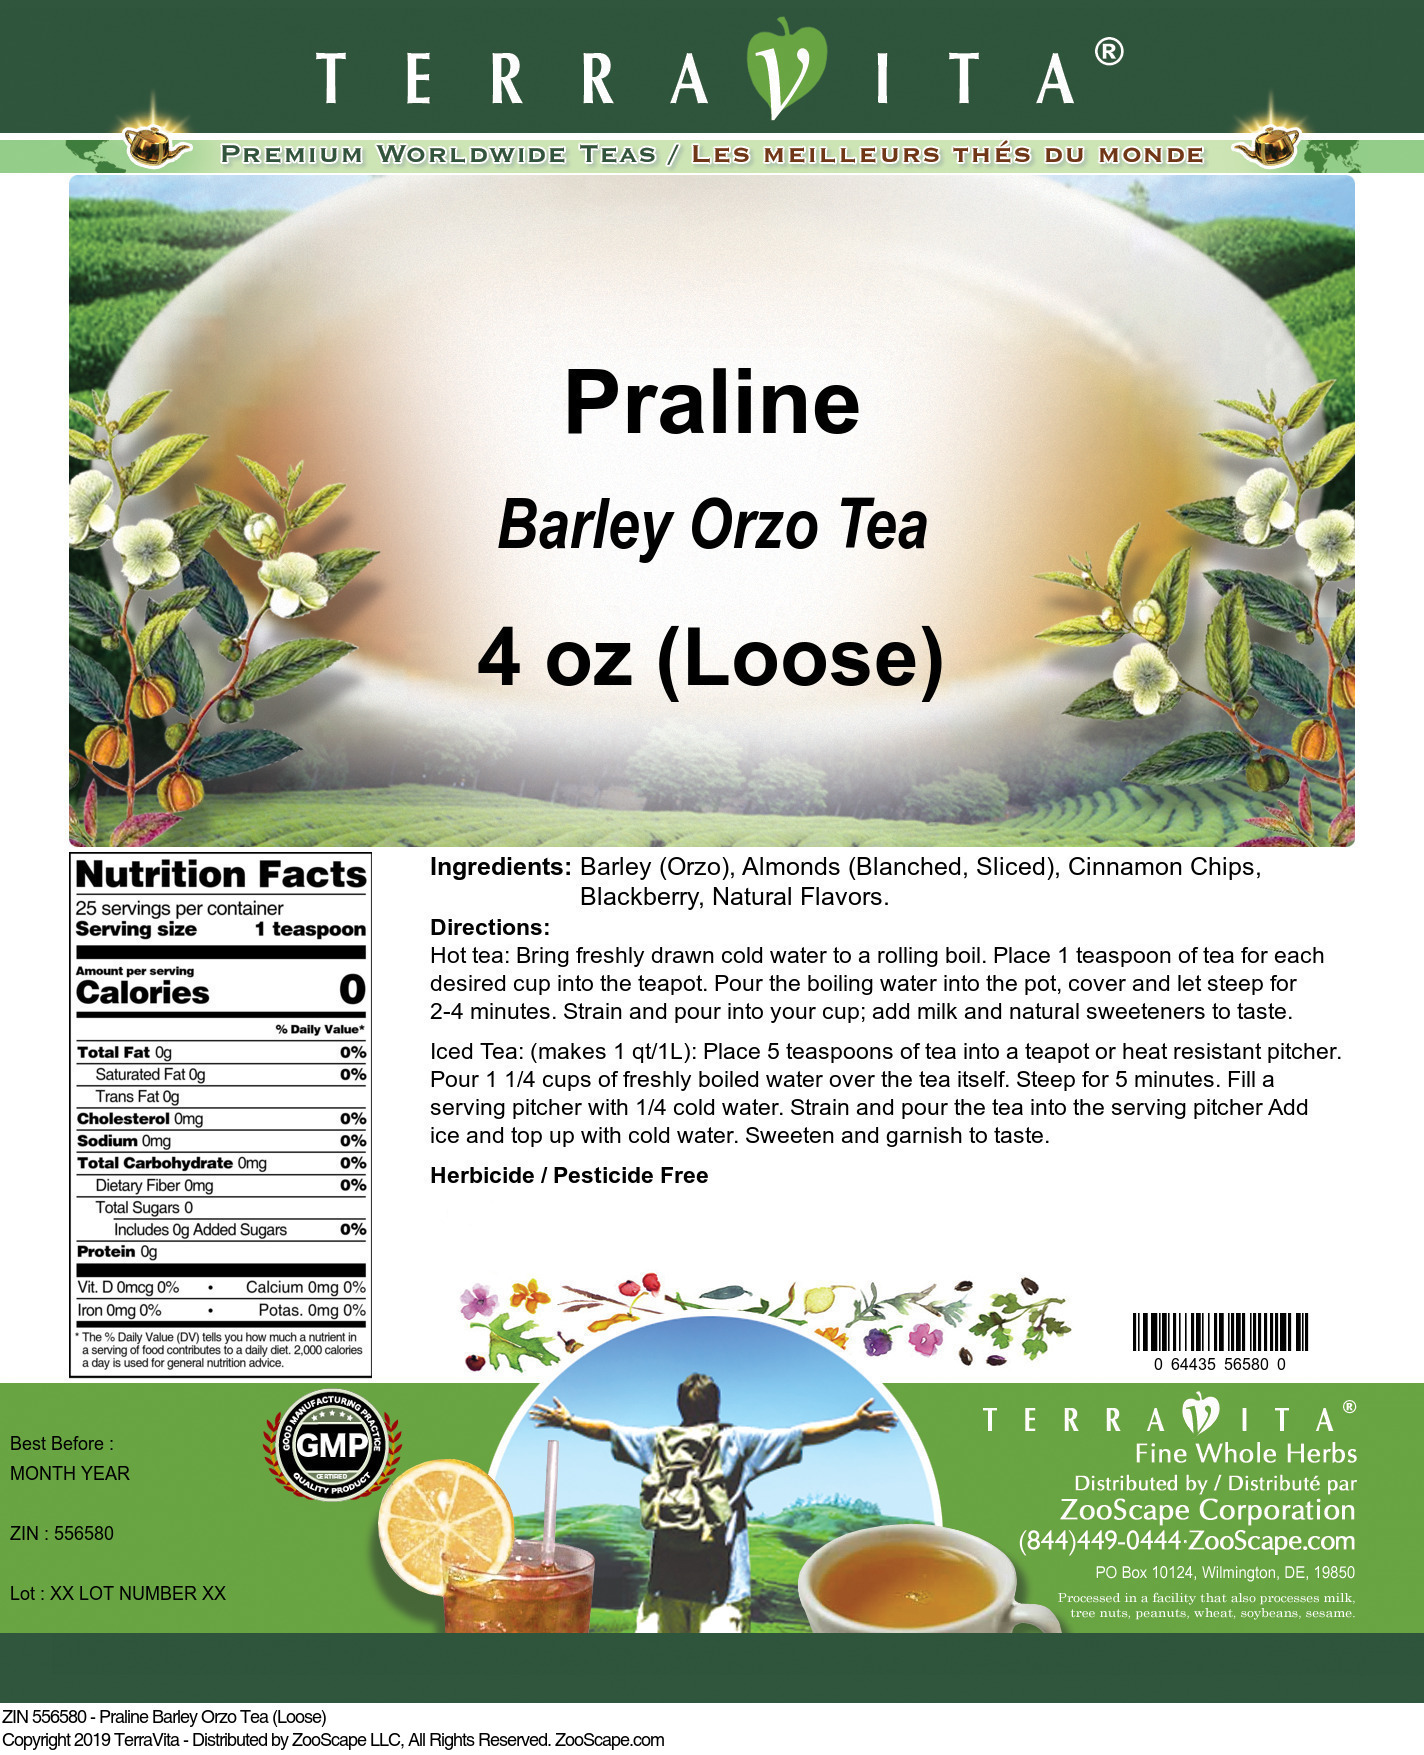 Praline Barley Orzo Tea (Loose) - Label